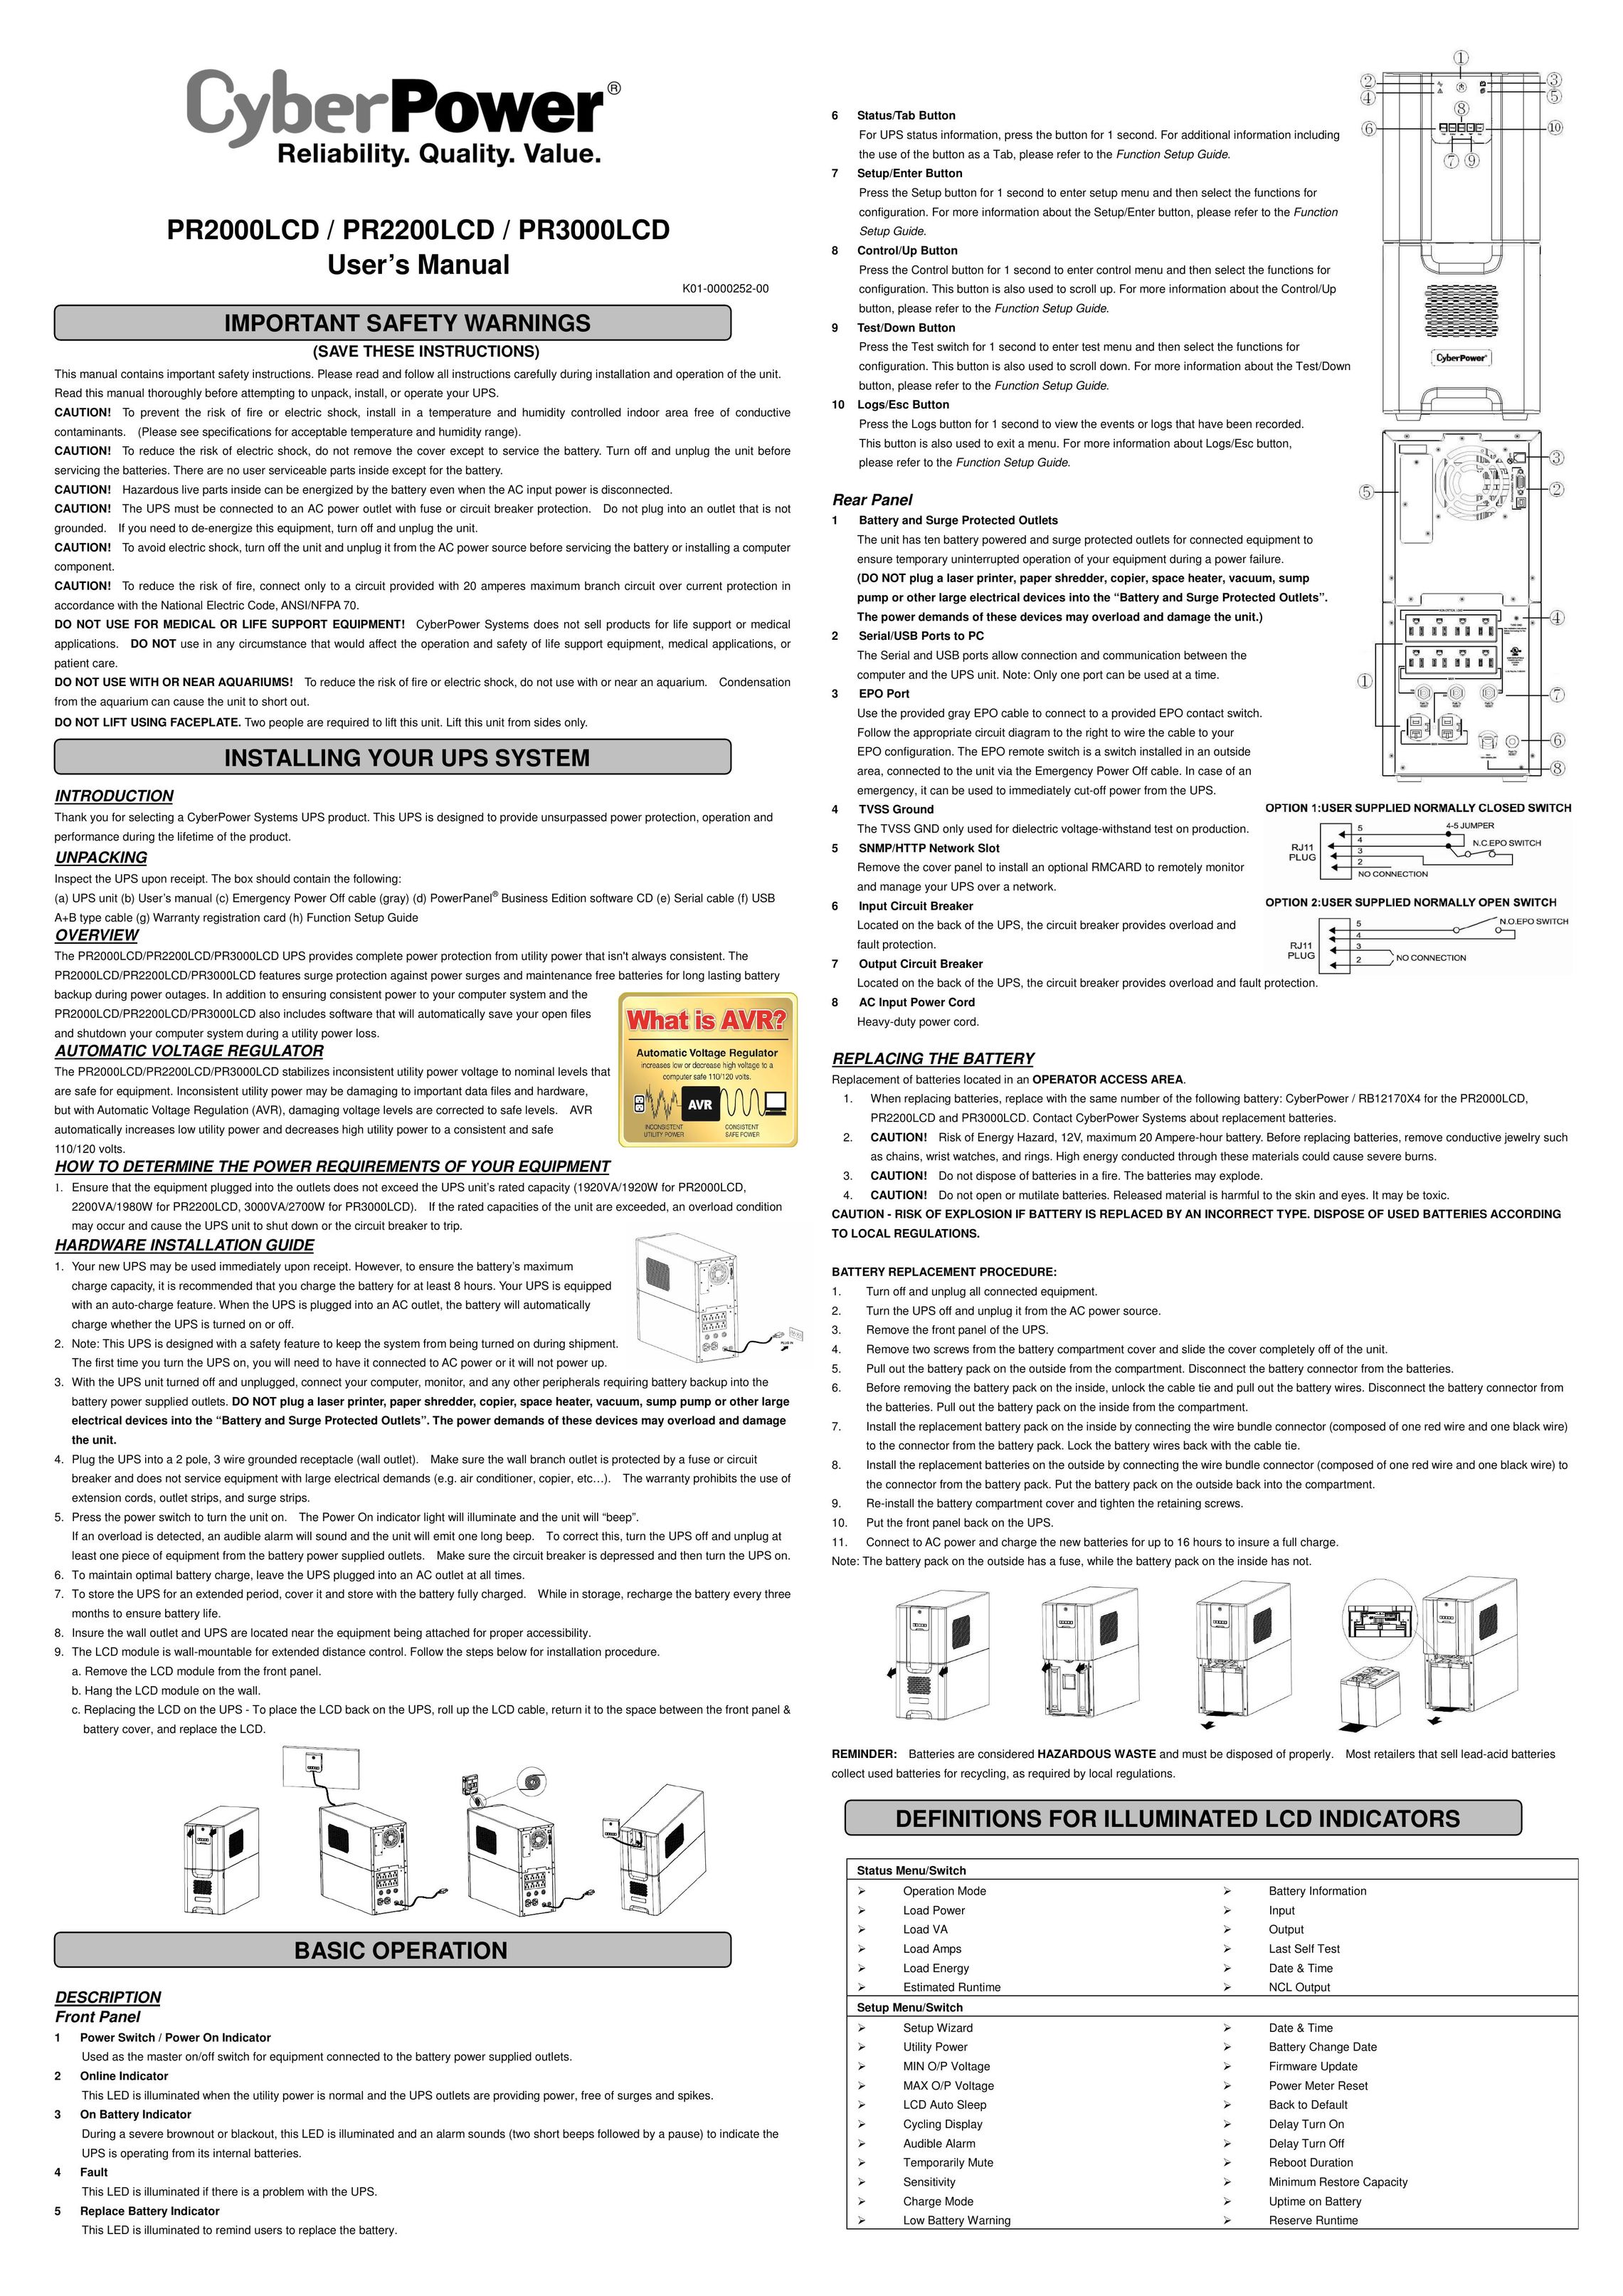 CyberPower PR2000LCD Power Supply User Manual